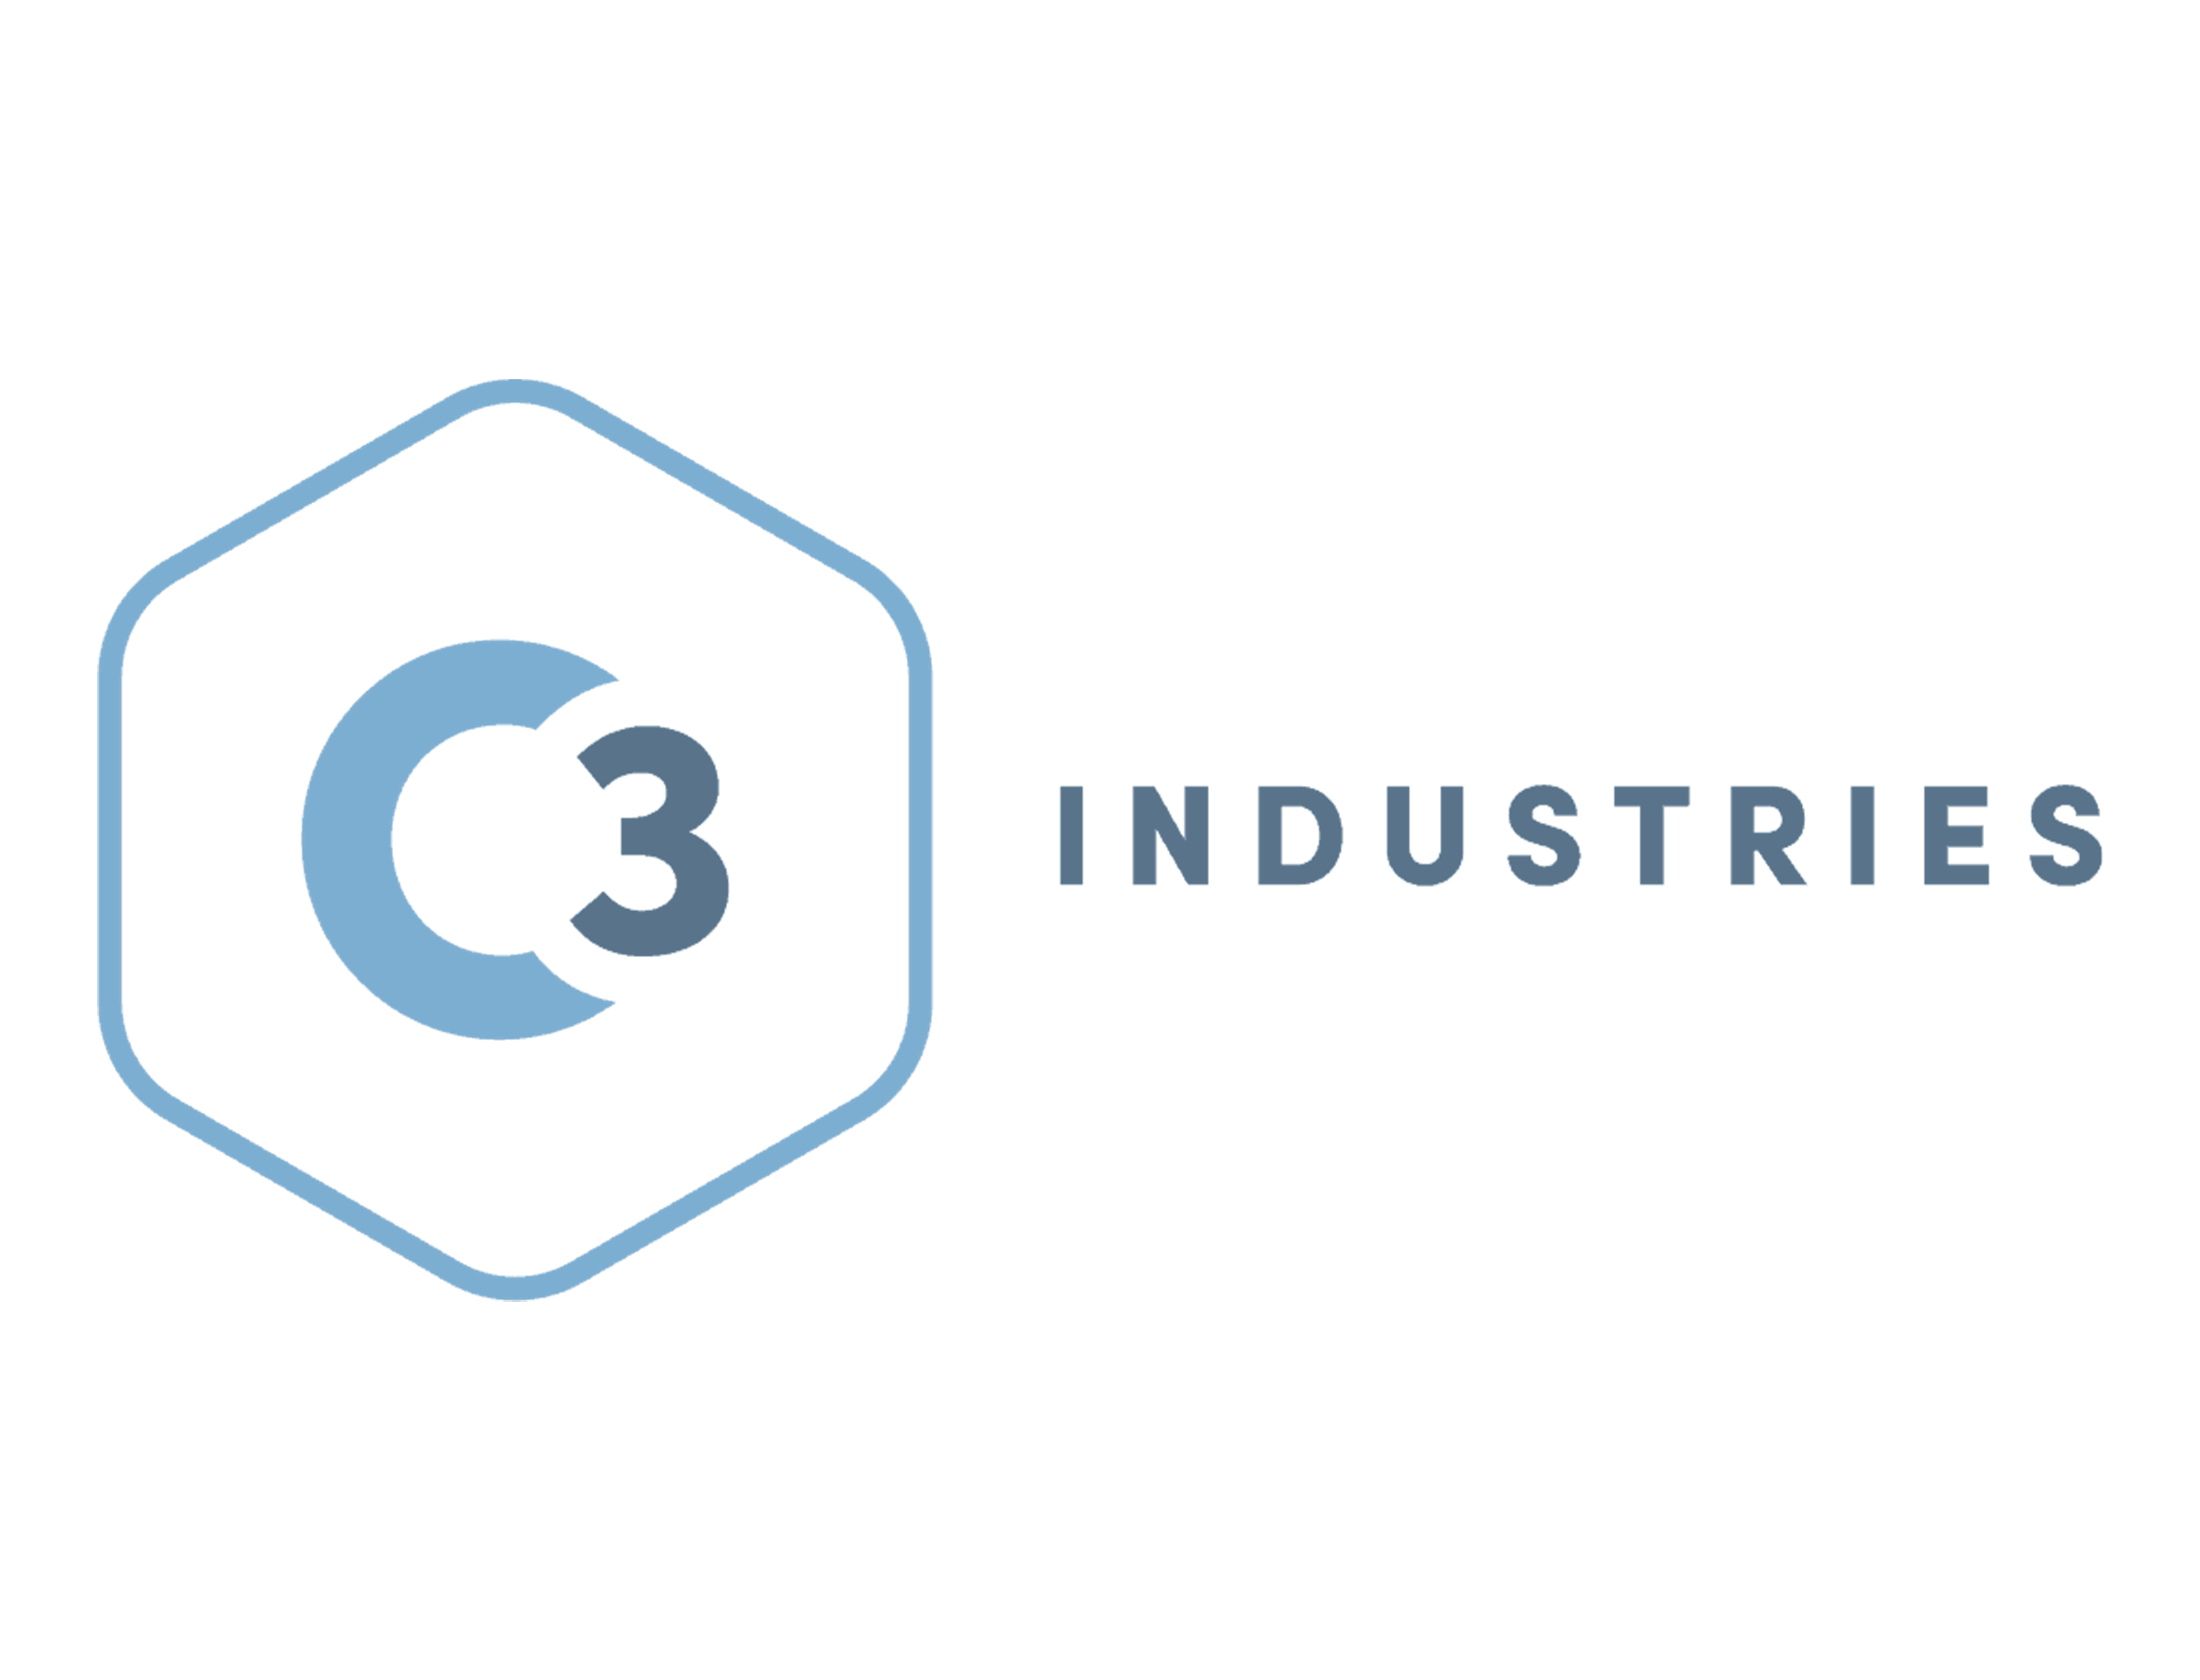 C3 Industries Logo